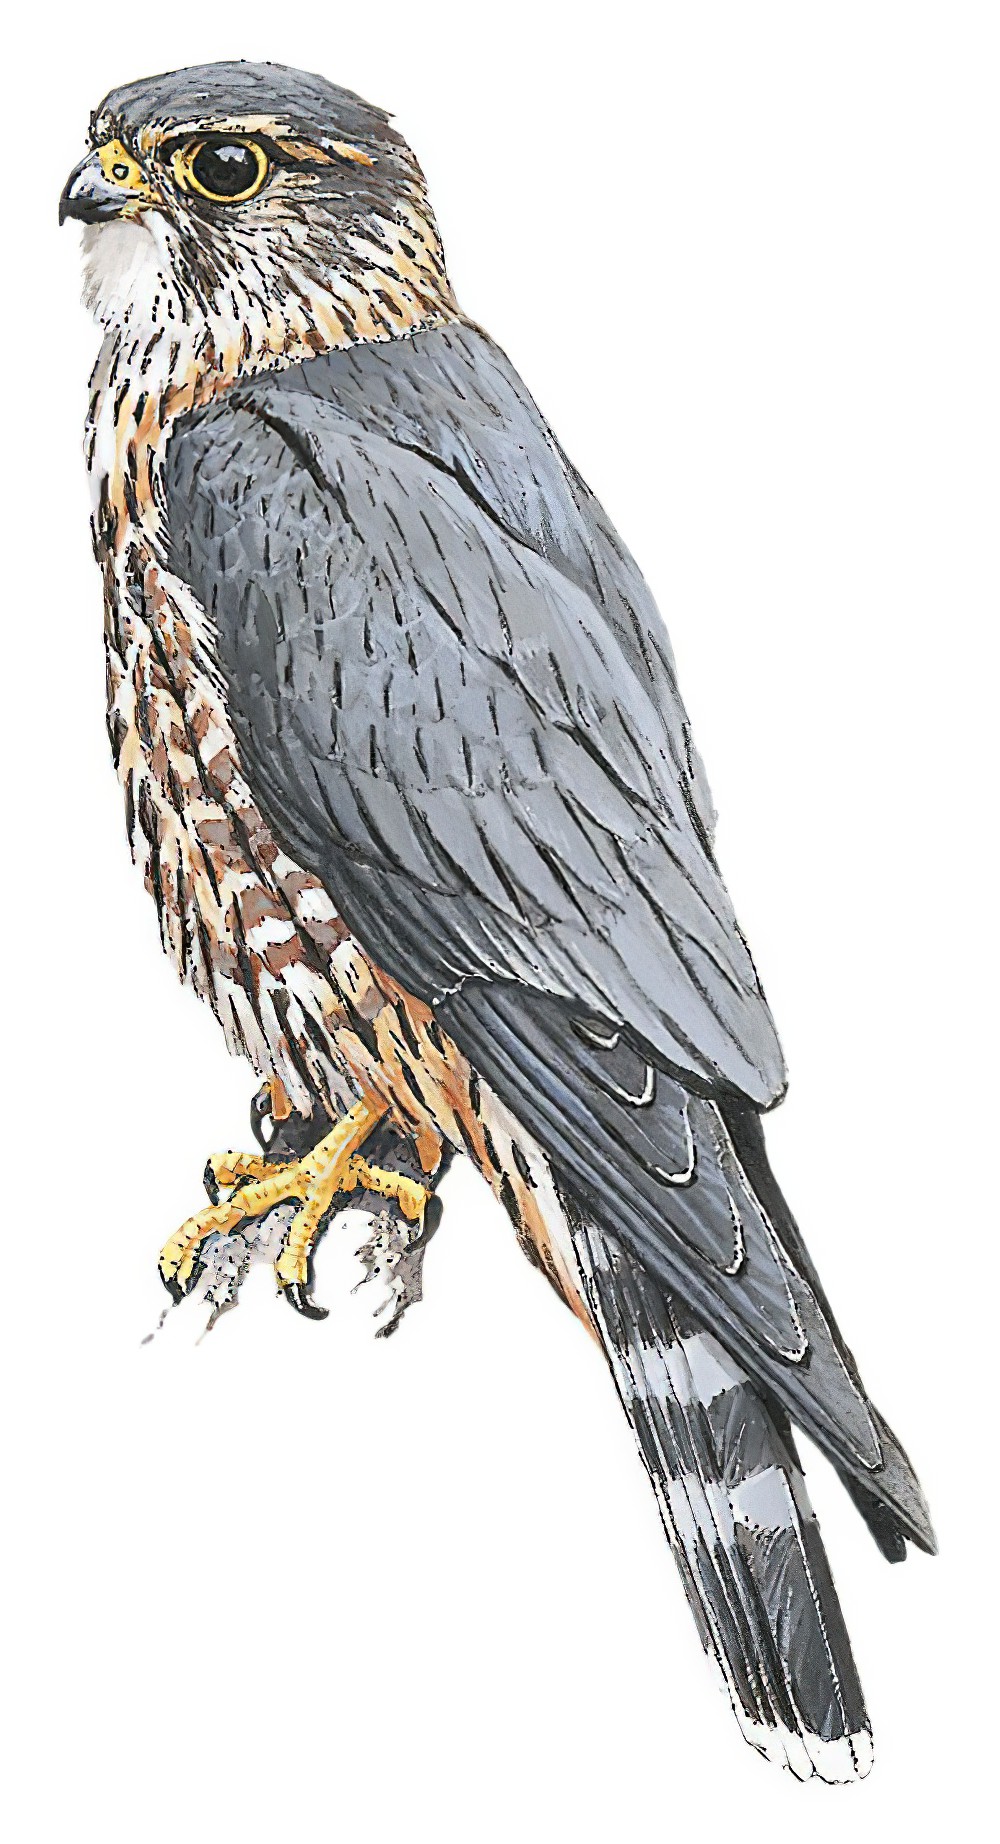 Merlin / Falco columbarius